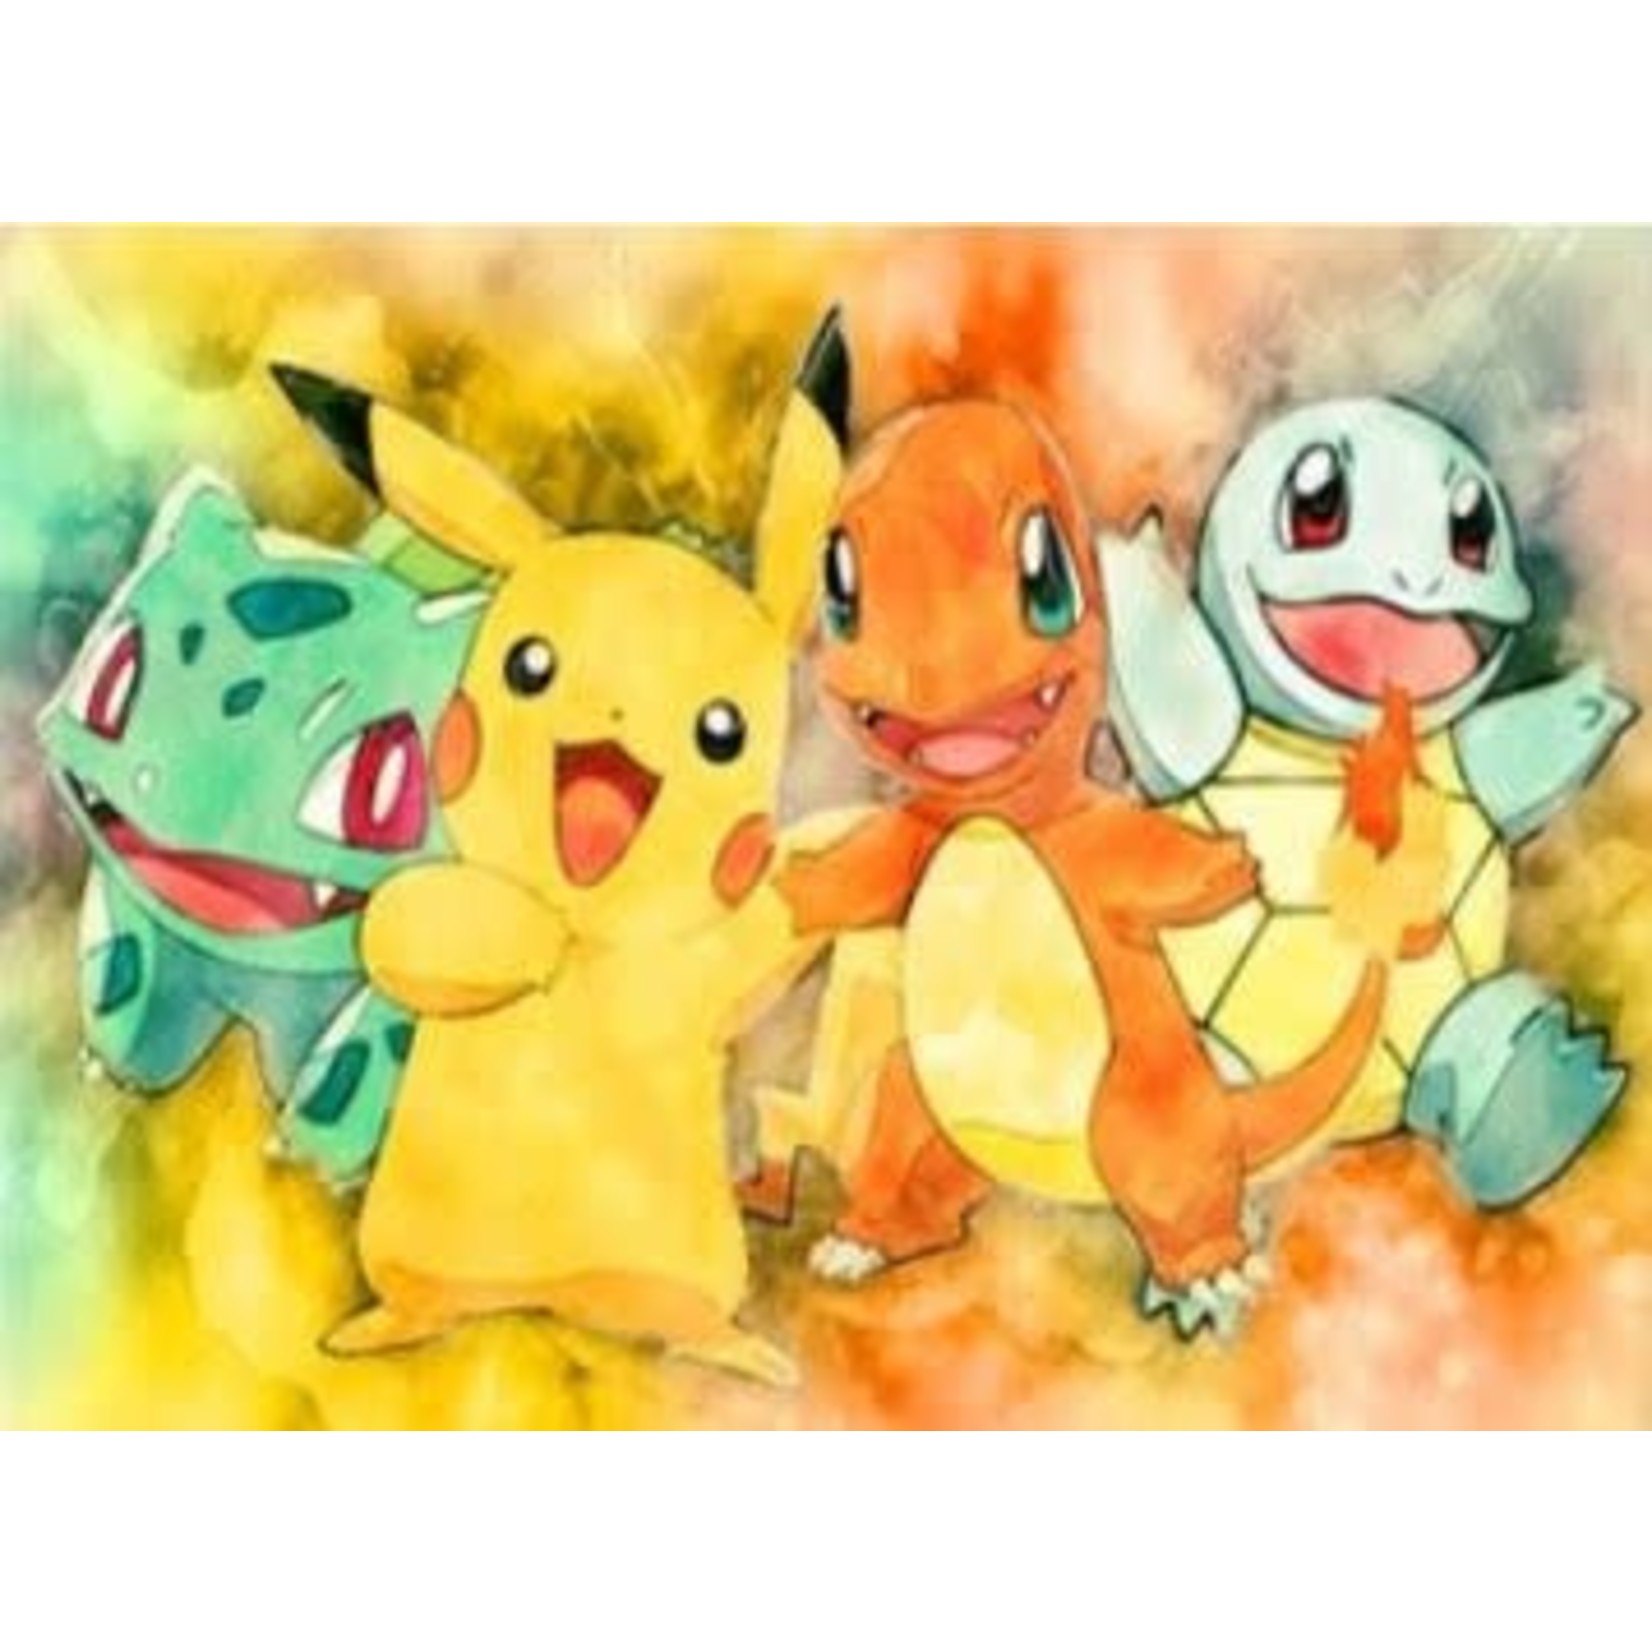 Pokémon Squirtle, Pikachu, Charmander & Bulbasaur